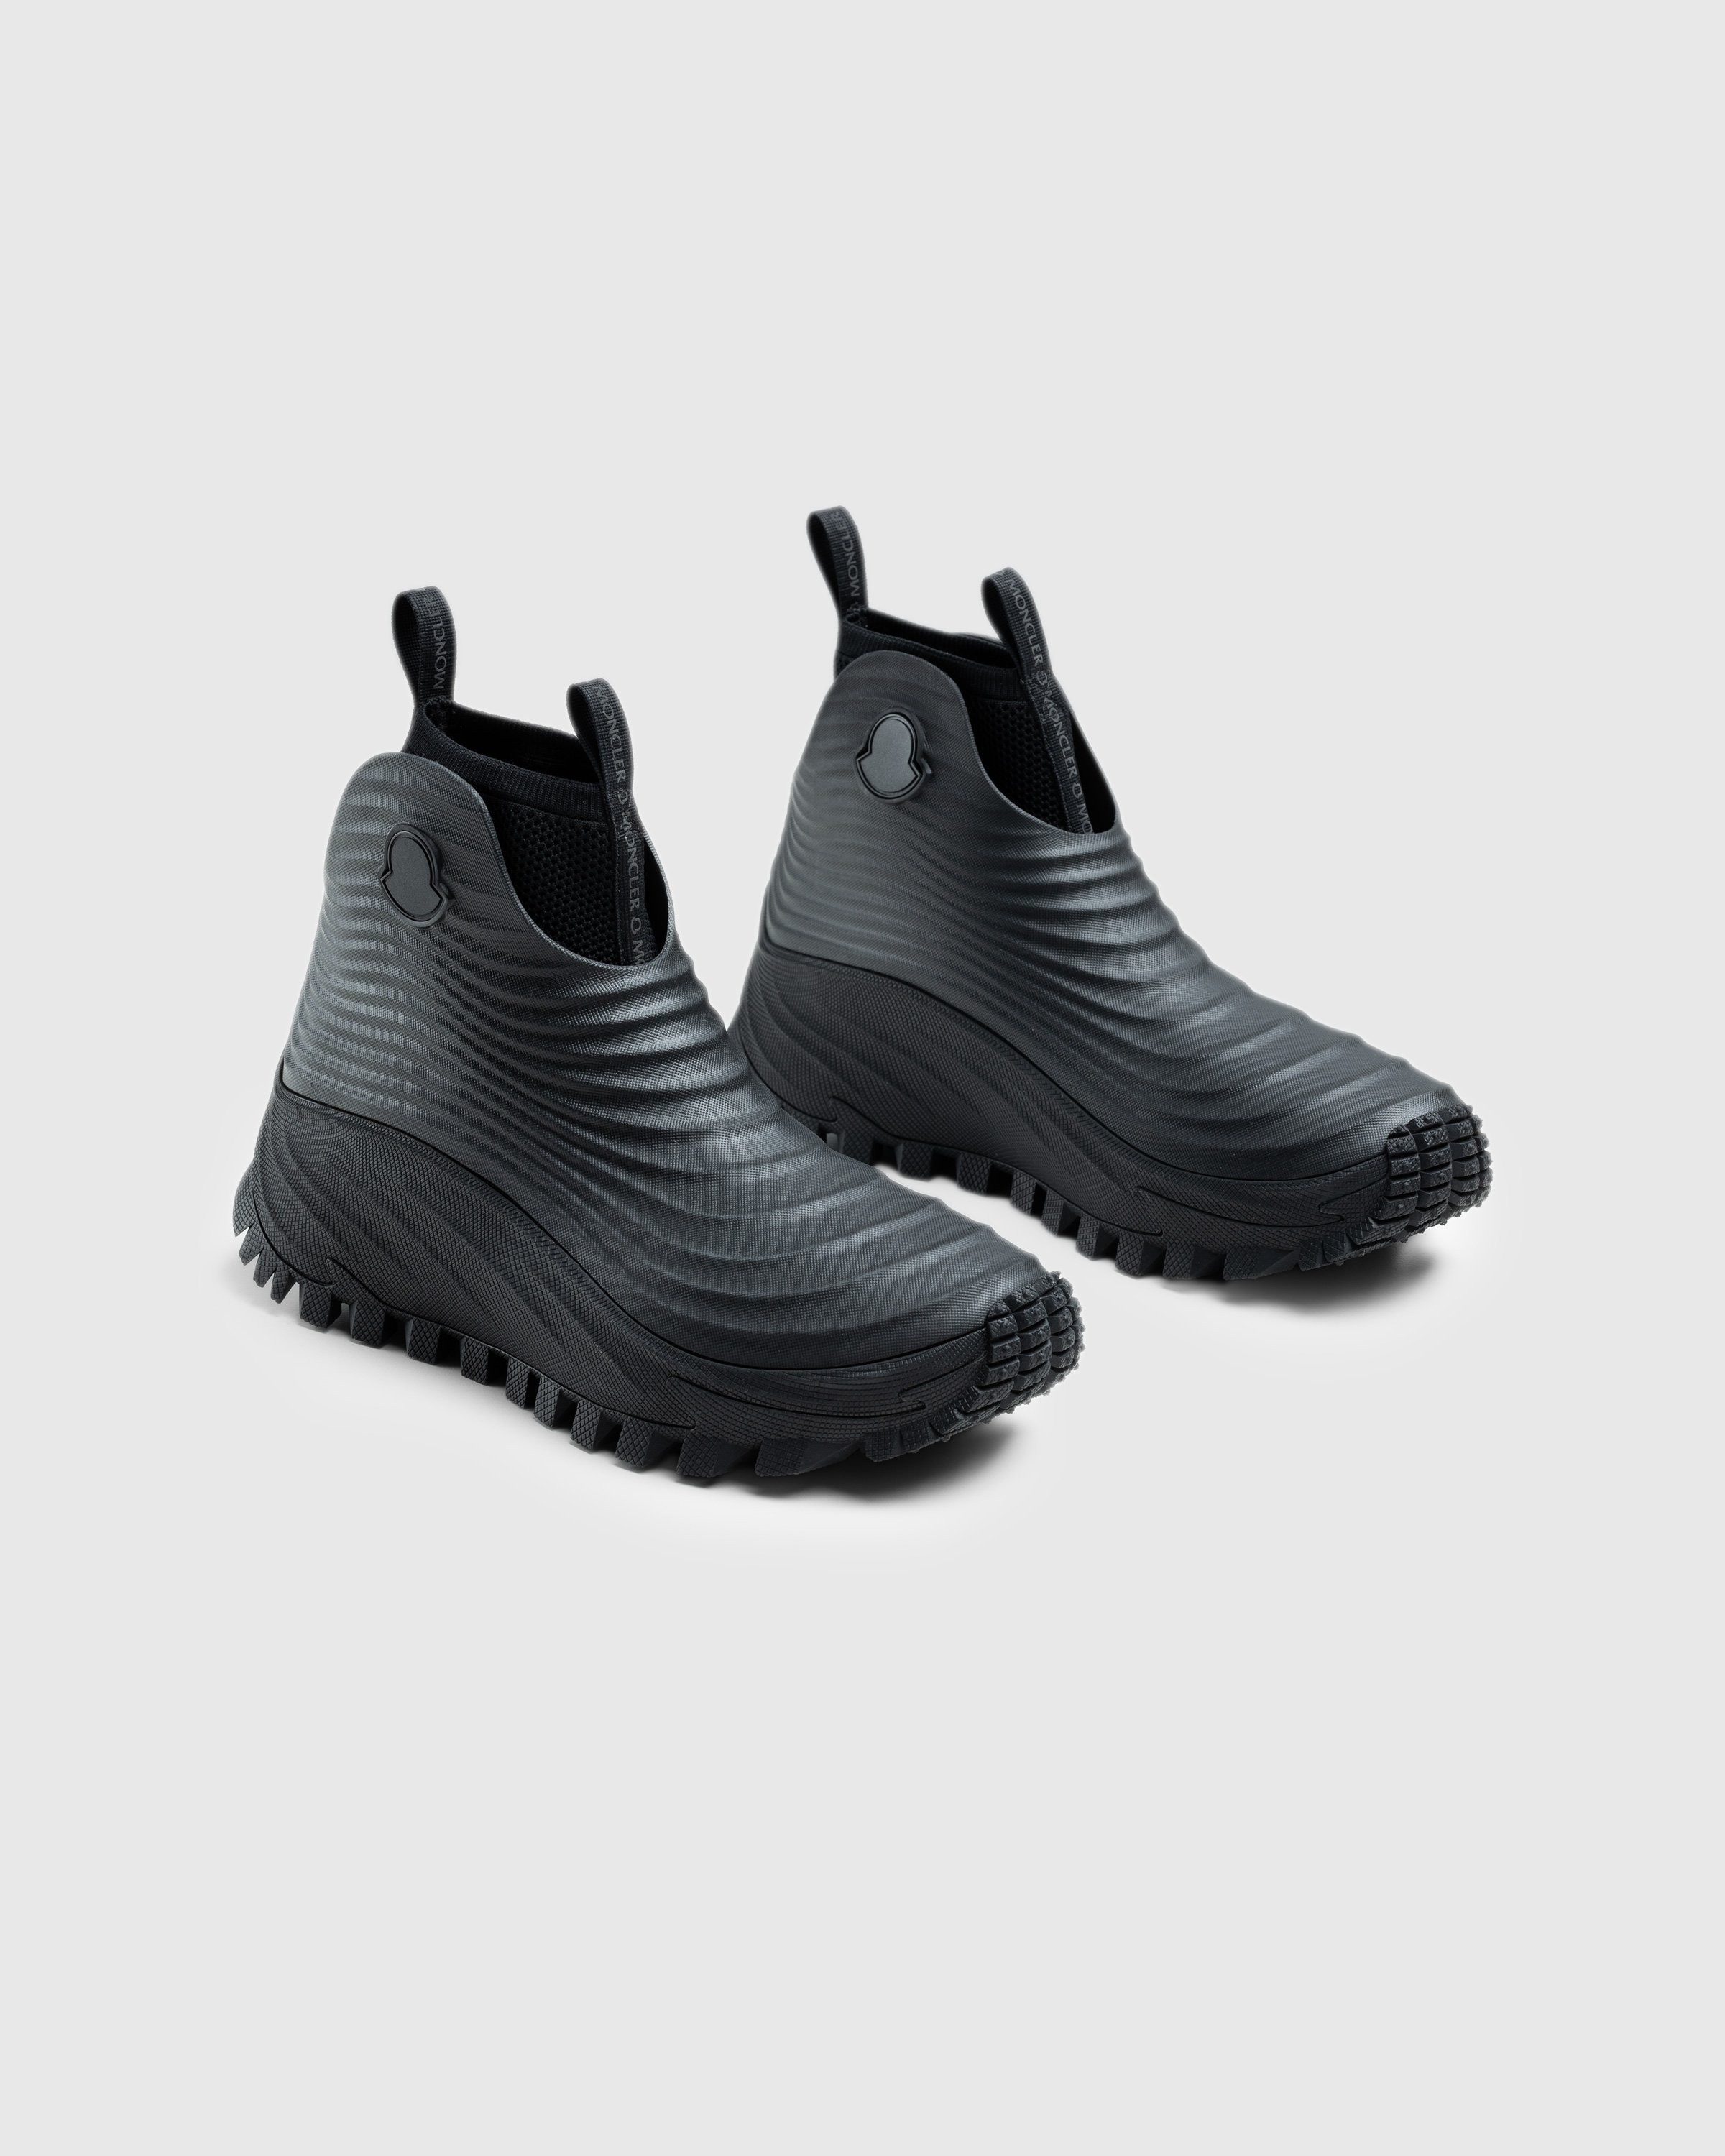 Moncler - Acqua High Rain Boots Black - Footwear - Black - Image 3